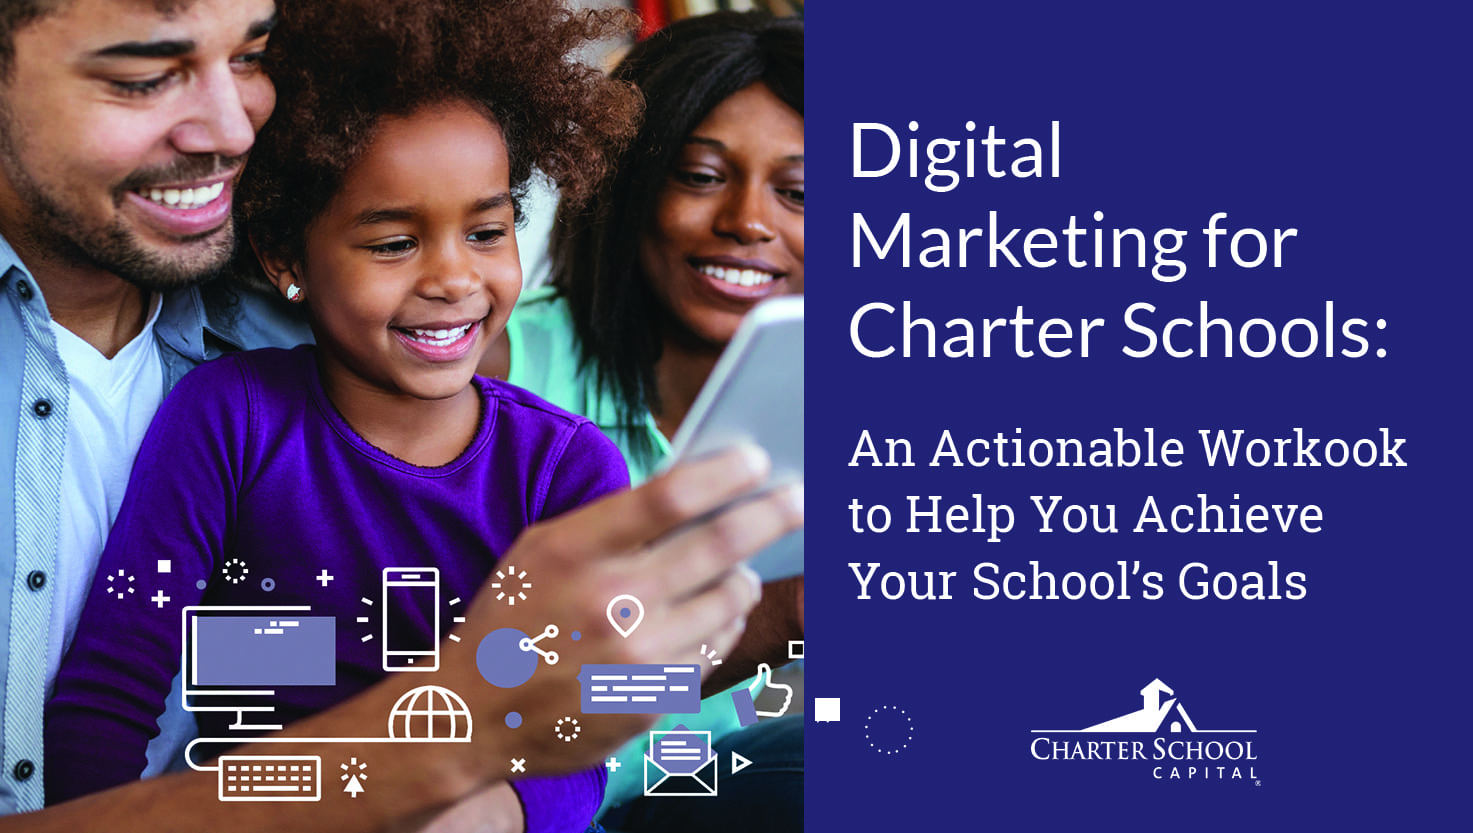 Digital Marketing for Charter Schools